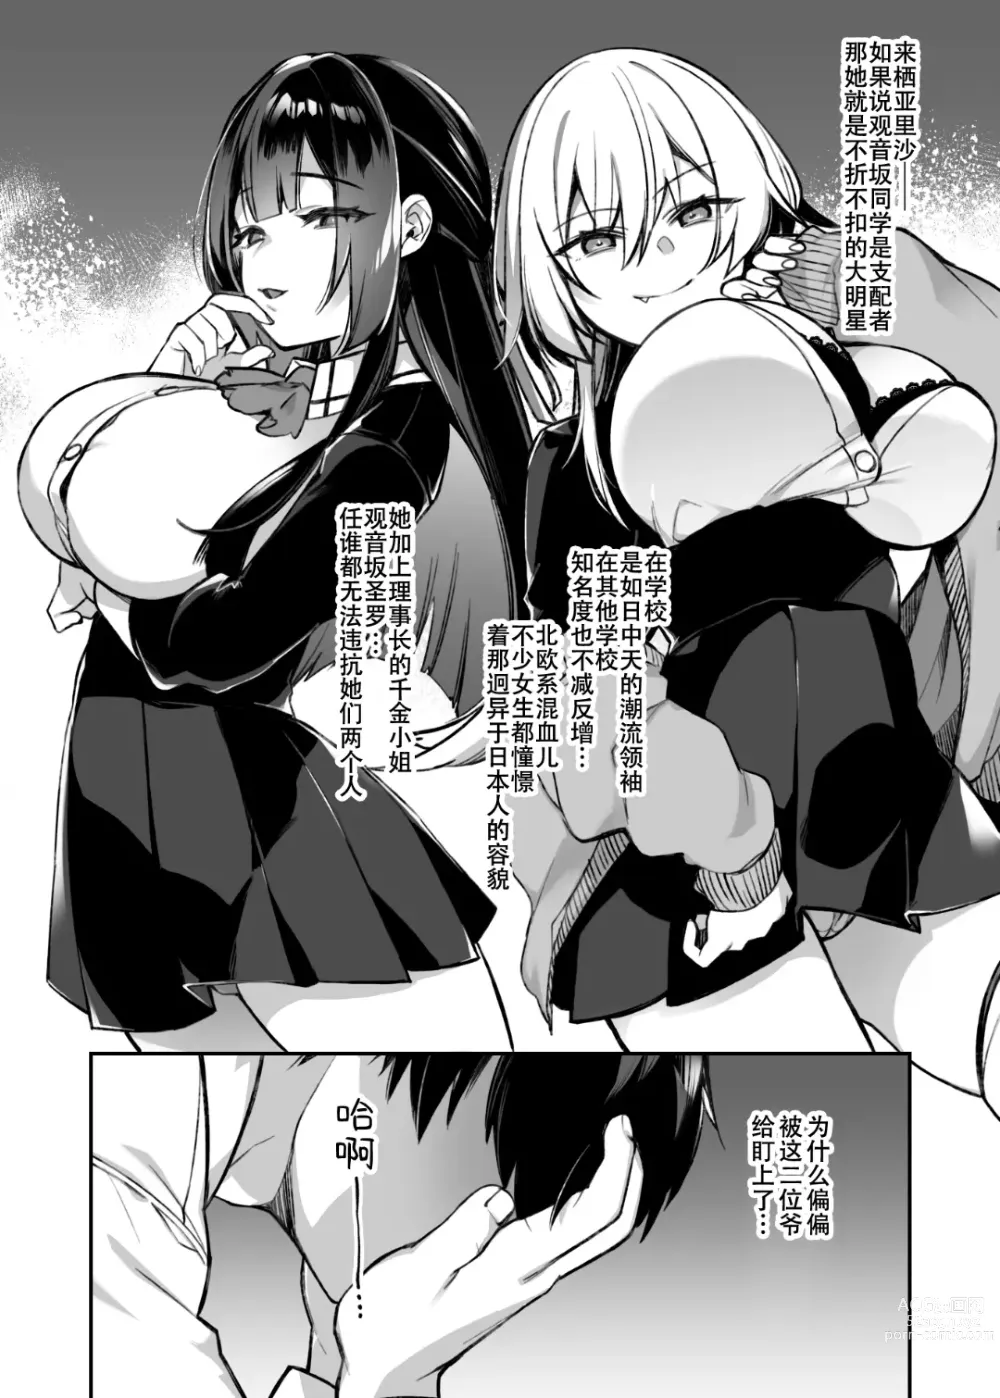 Page 9 of manga Hypnosis 1 (uncensored)